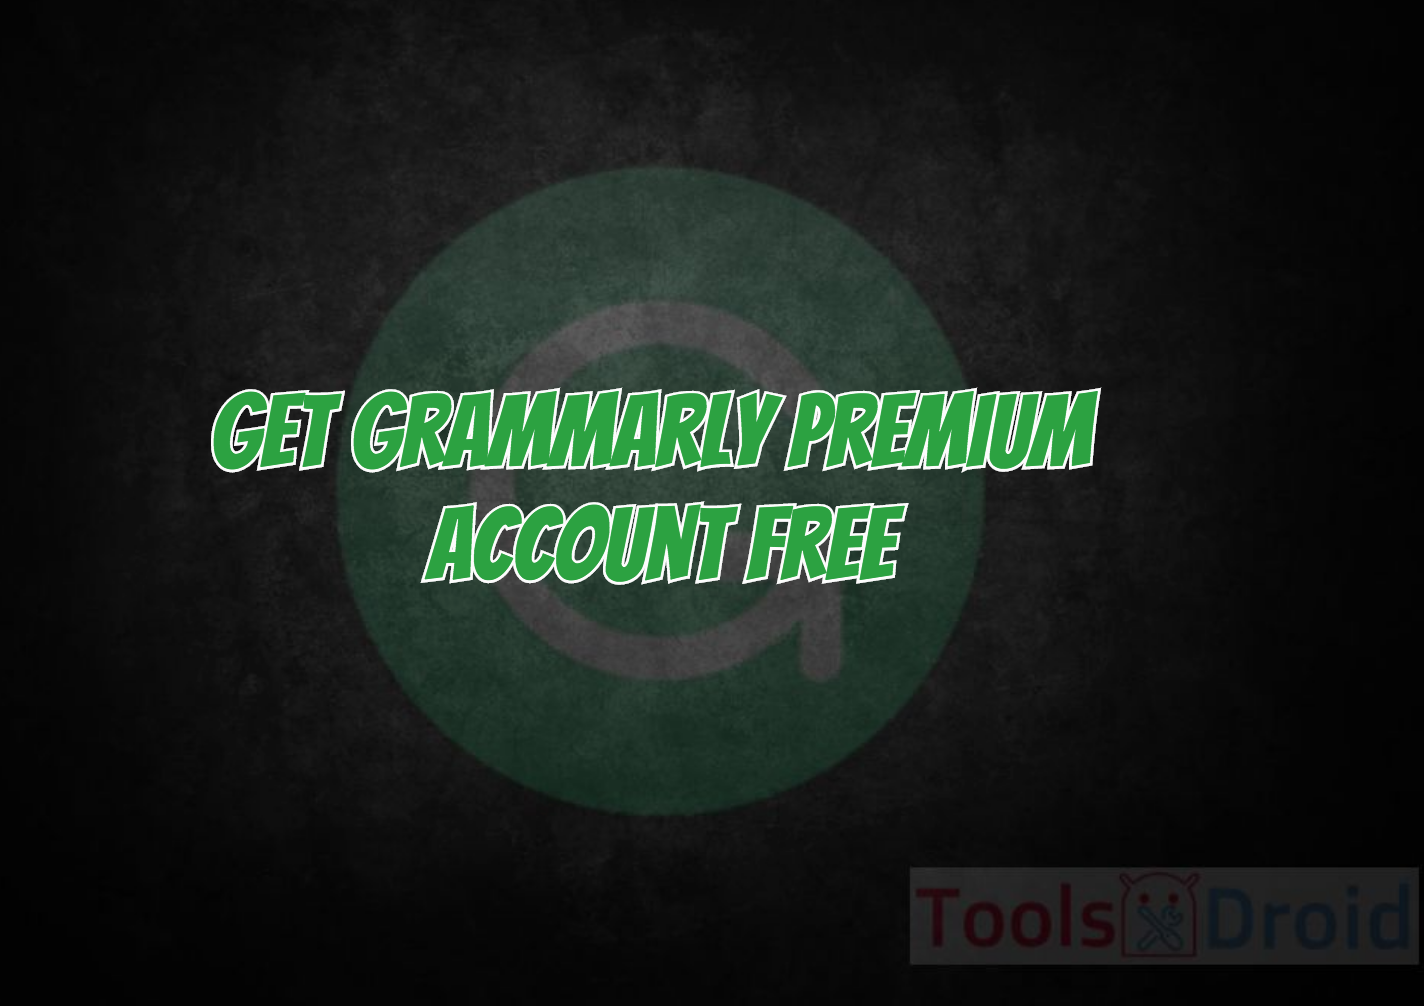 grammarly account free reddit may 2018